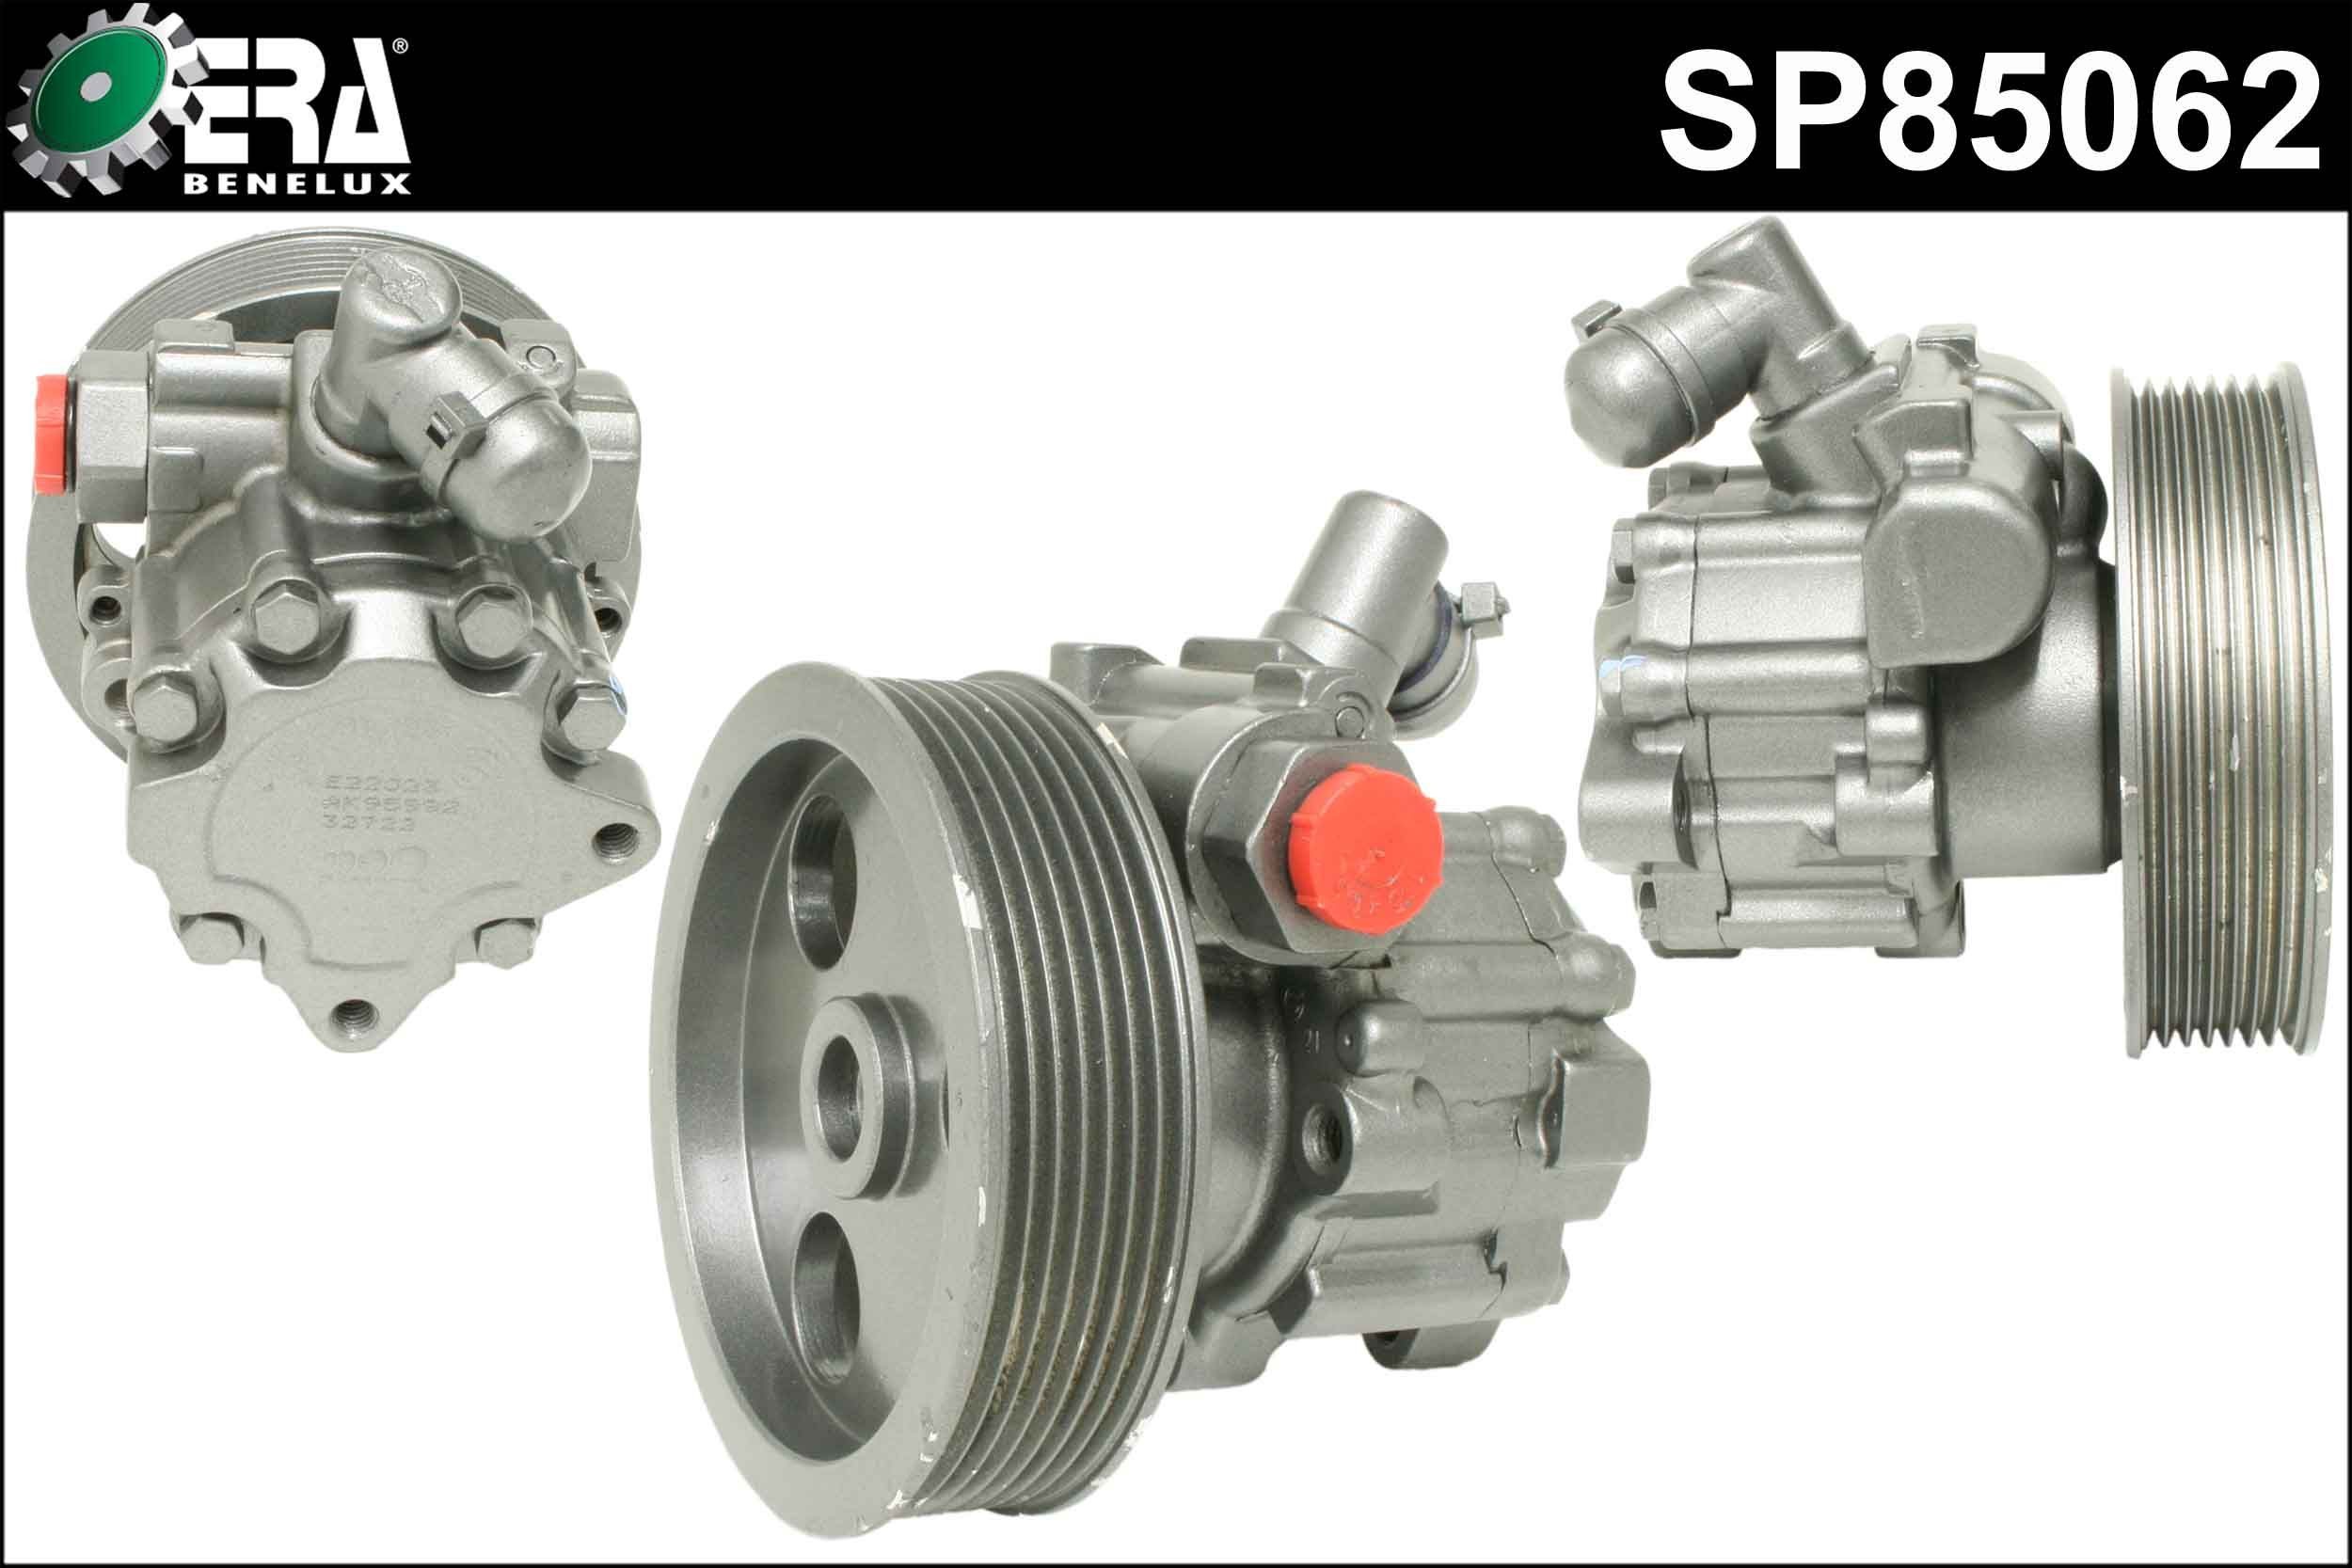 ERA Benelux SP85062 Power steering pump A 006 466 31 01